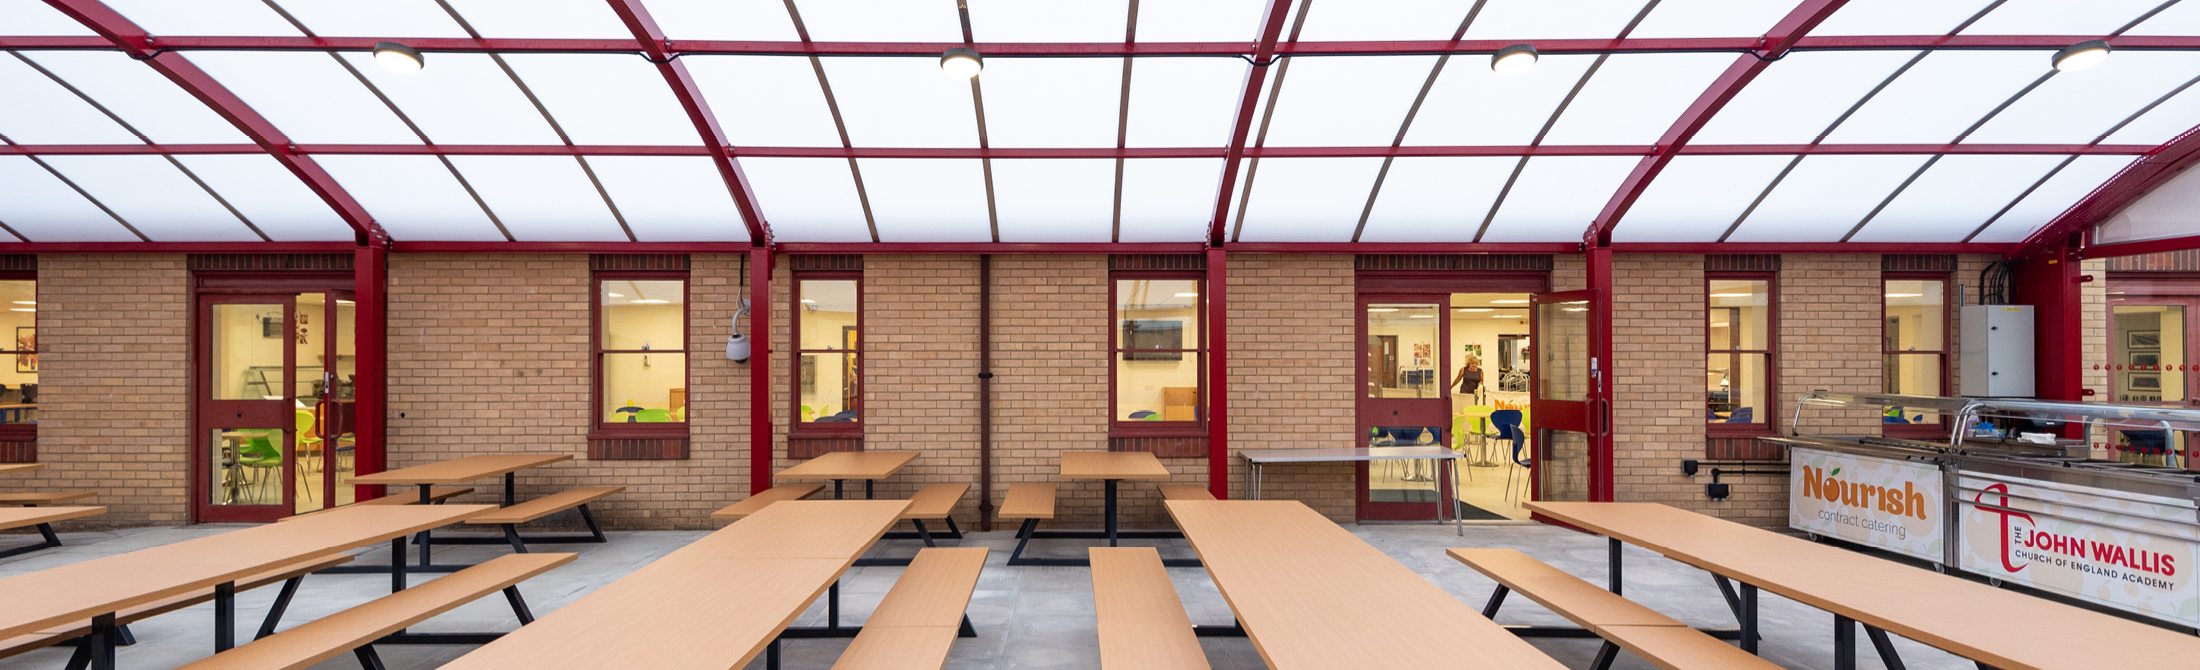 Polycarbonate enclosed school canopy